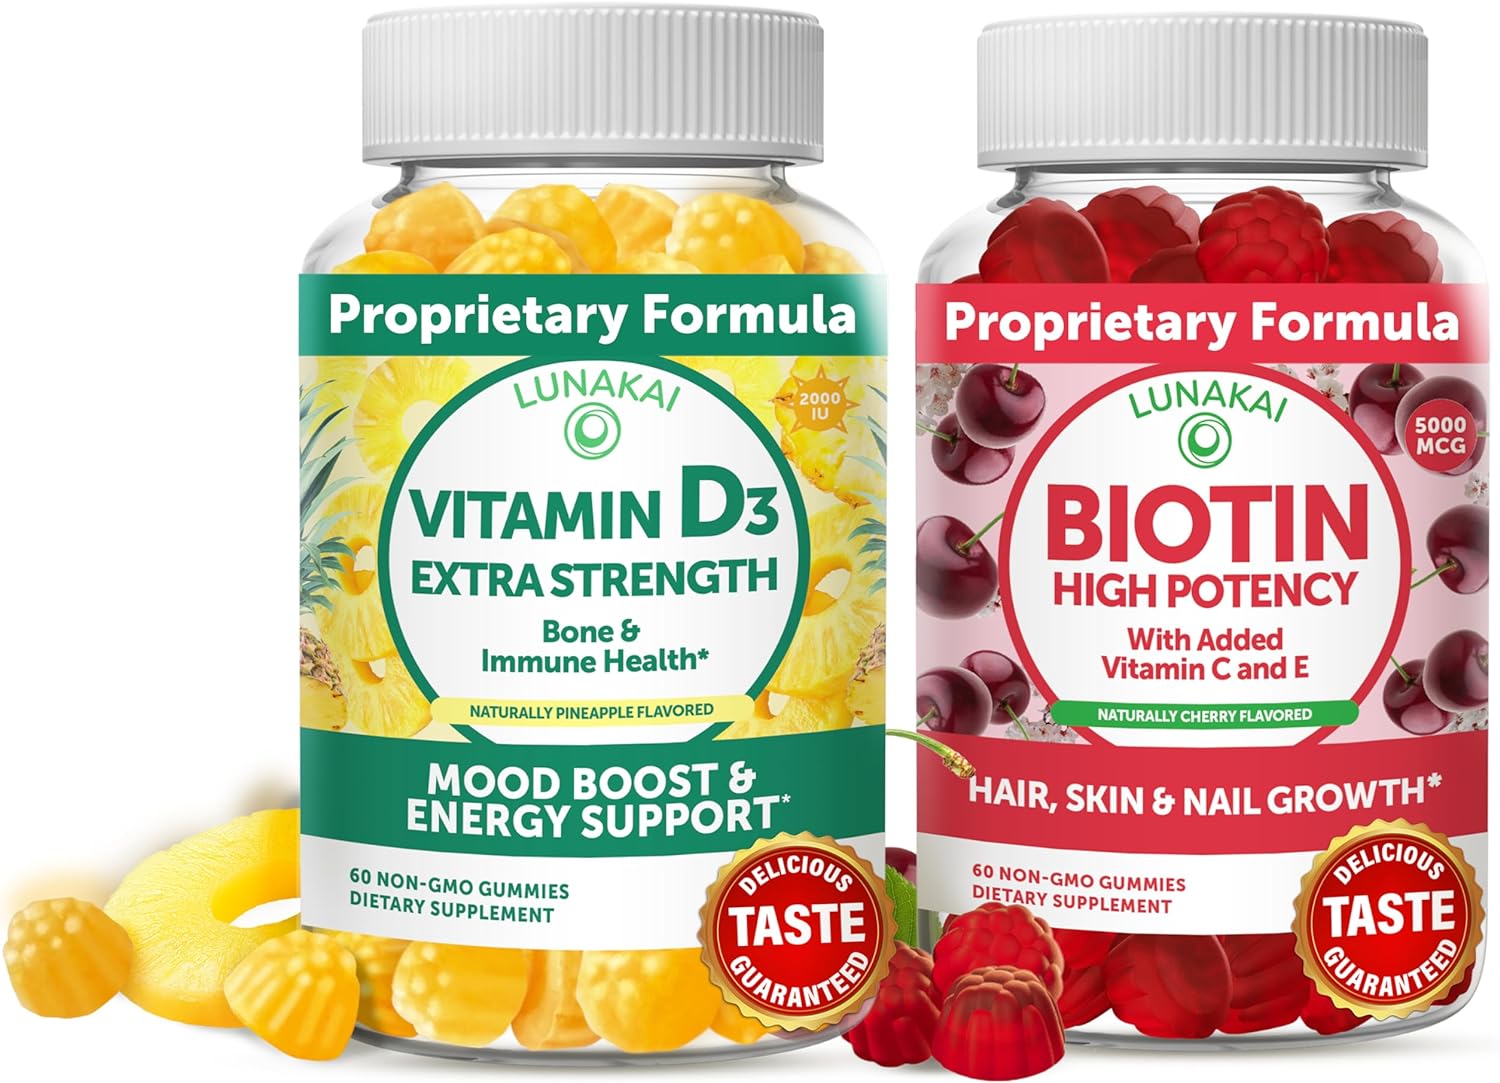 Vitamin D3 and Biotin Gummies Bundle - Non-GMO, Gluten Free, No Corn Syrup, All Natural Supplements- 60 ct Vitamin D3 Gummies and 60 ct Biotin Gummies - 30 Days Supply